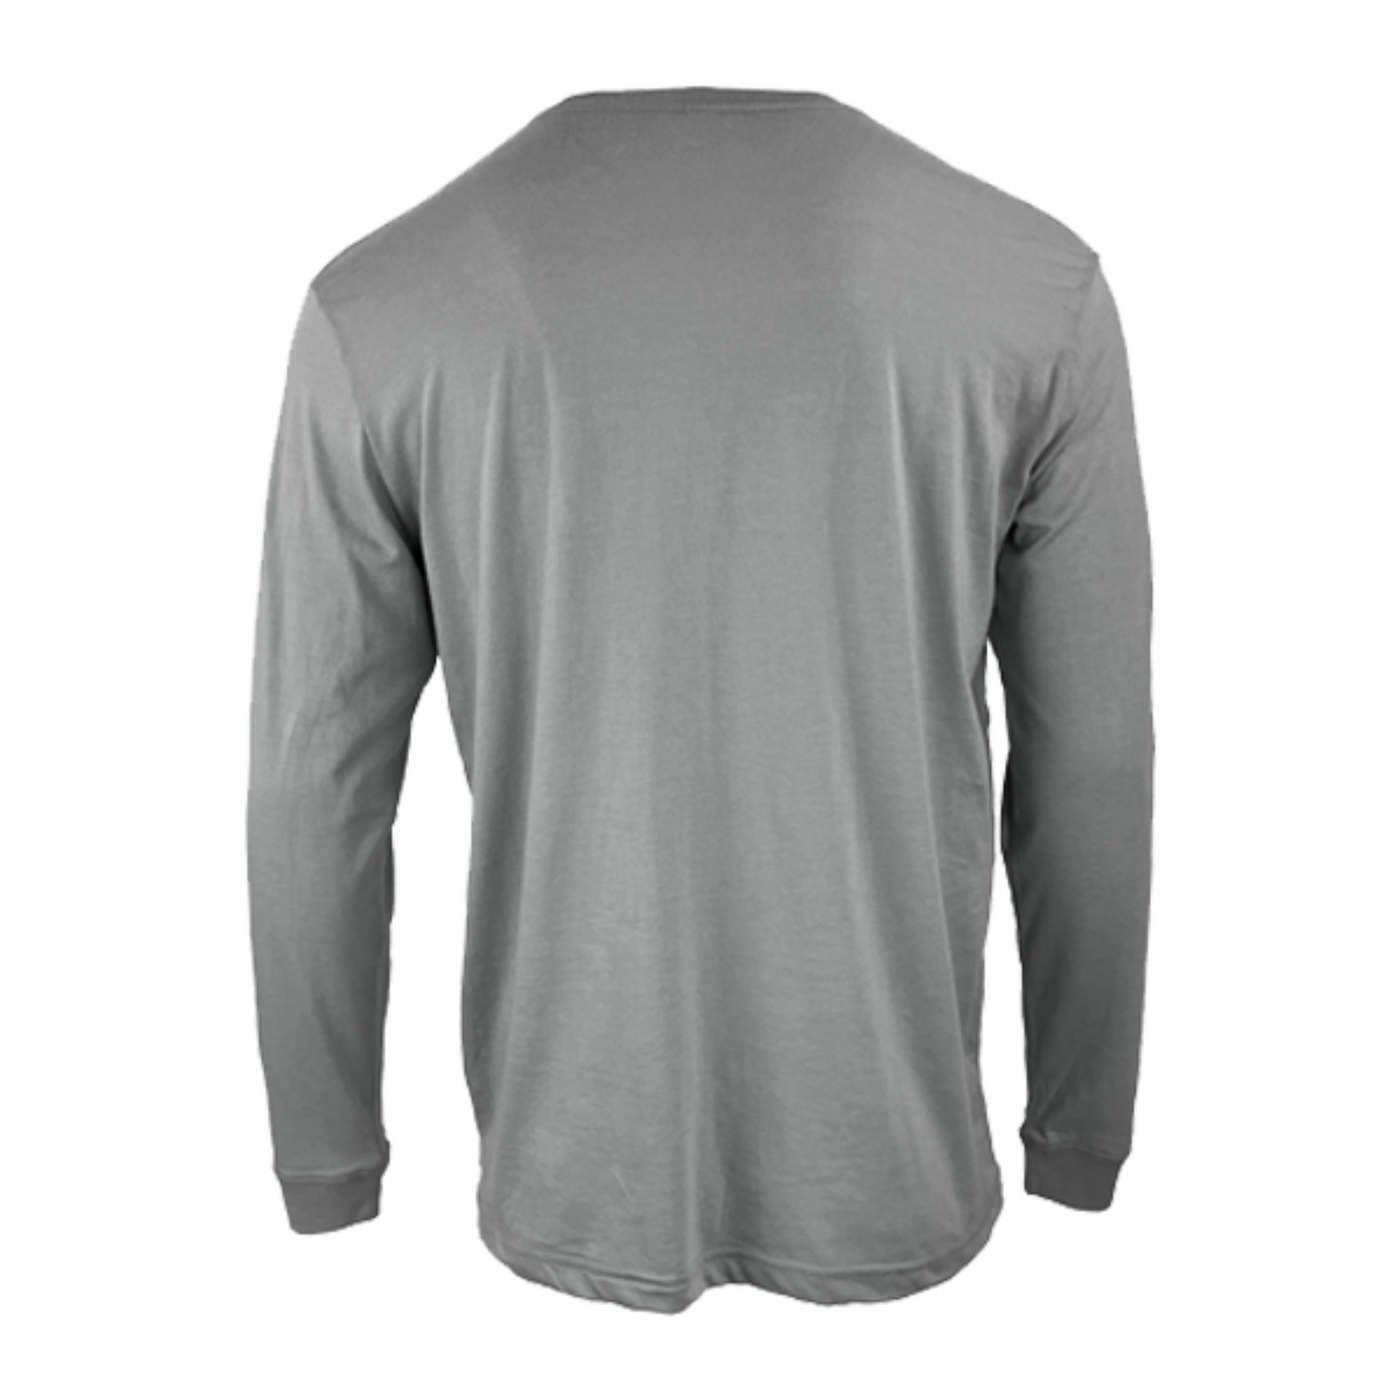 Musicians First Apparel Co. - Logo Long Sleeve Shirt: Solid Gray